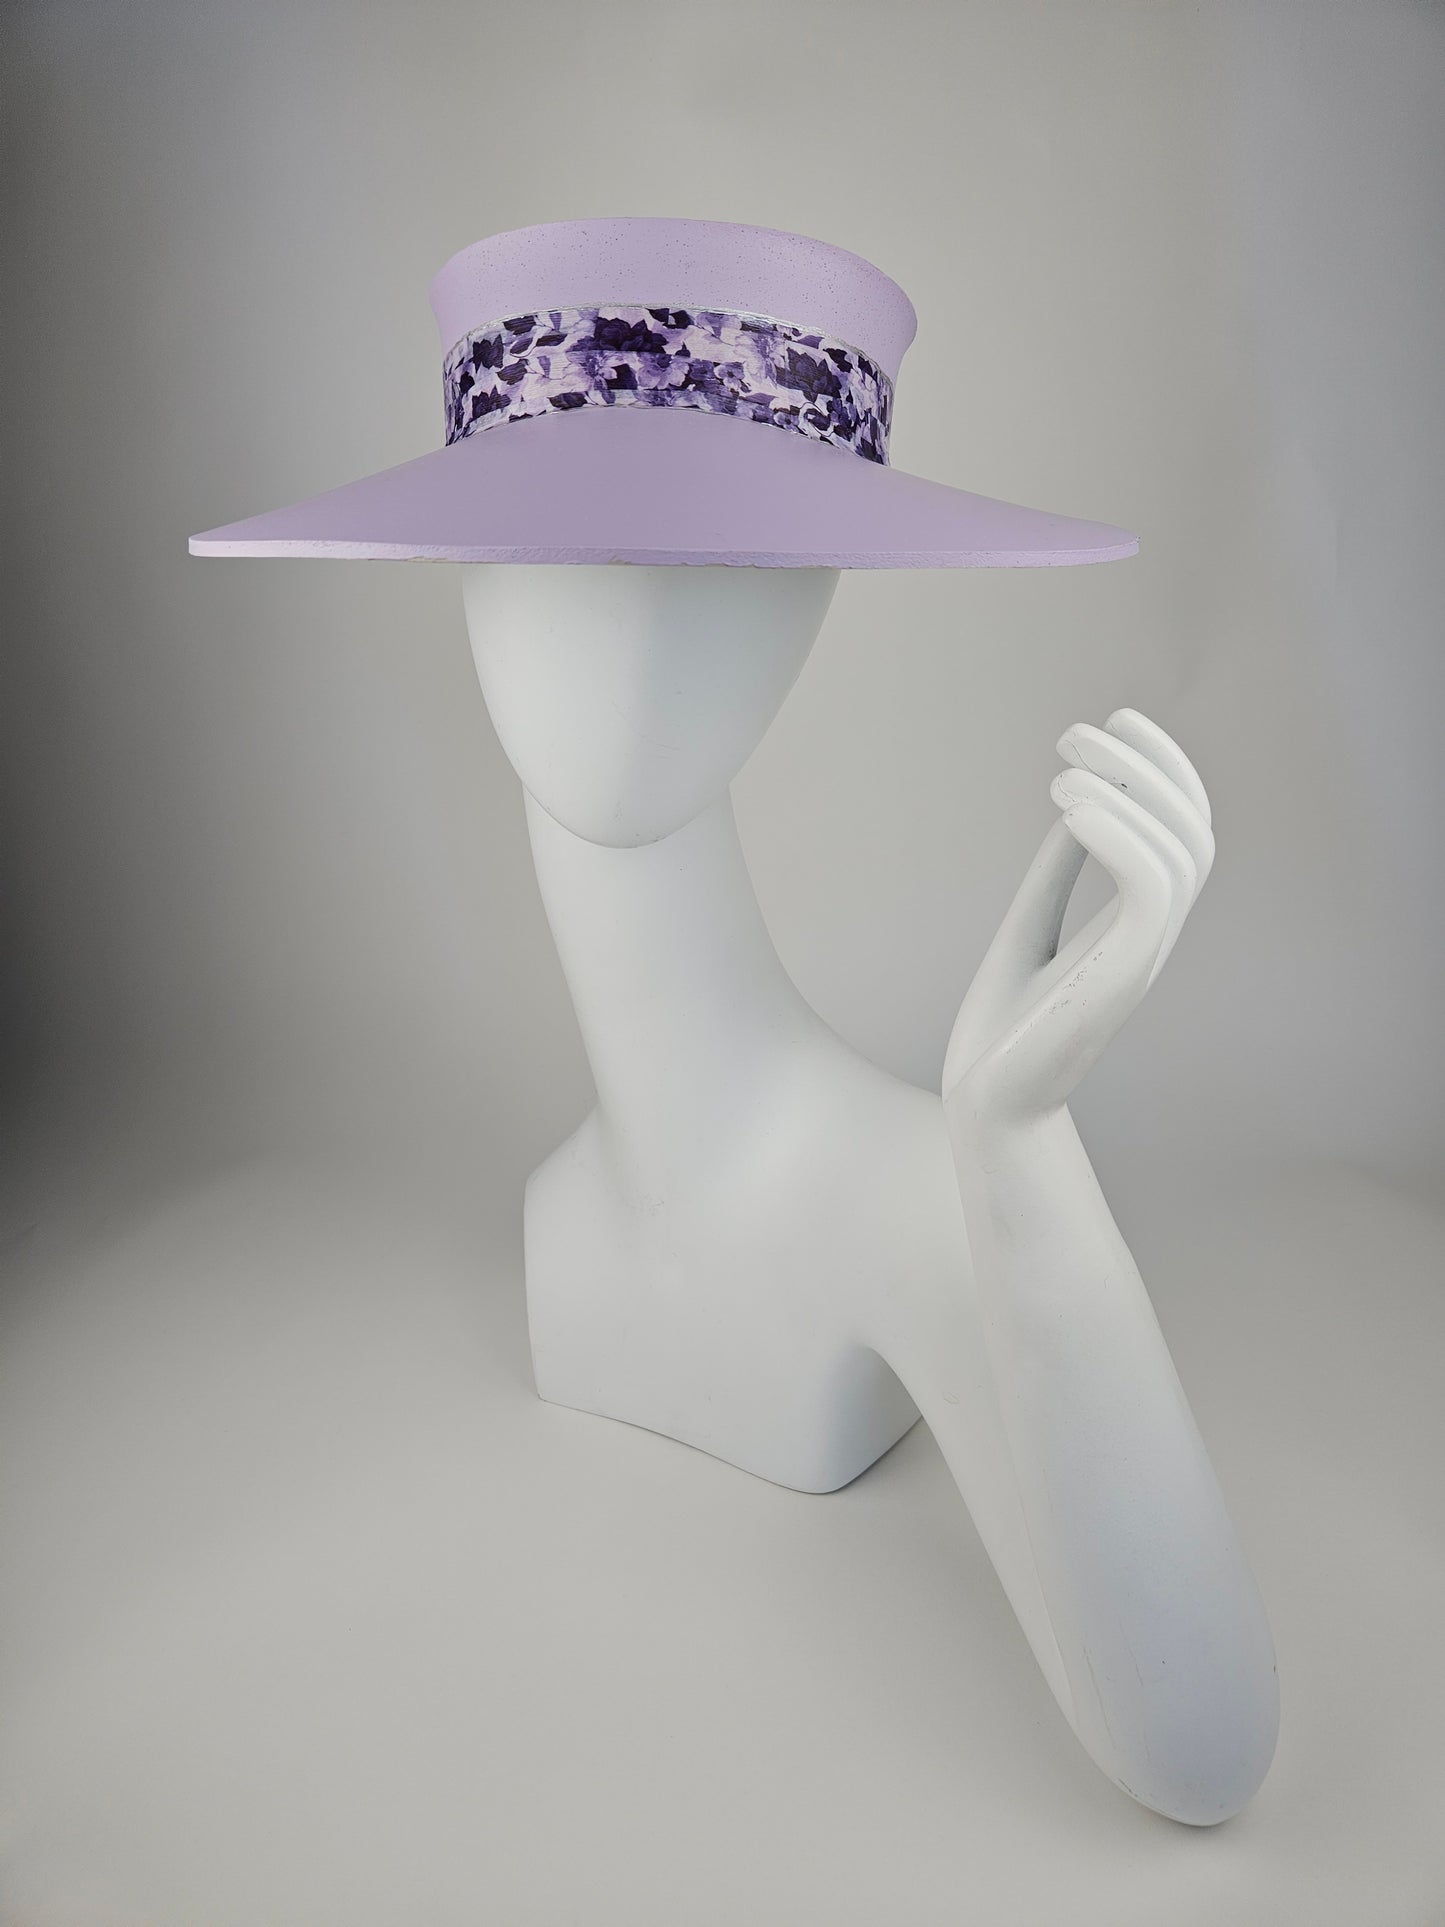 Lilac Purple Audrey Sun Visor Hat with Elegant Dark Purple Floral Band: 1950s, Walks, Brunch, Asian, Golf, Summer, Church, No Headache, Pool, Beach